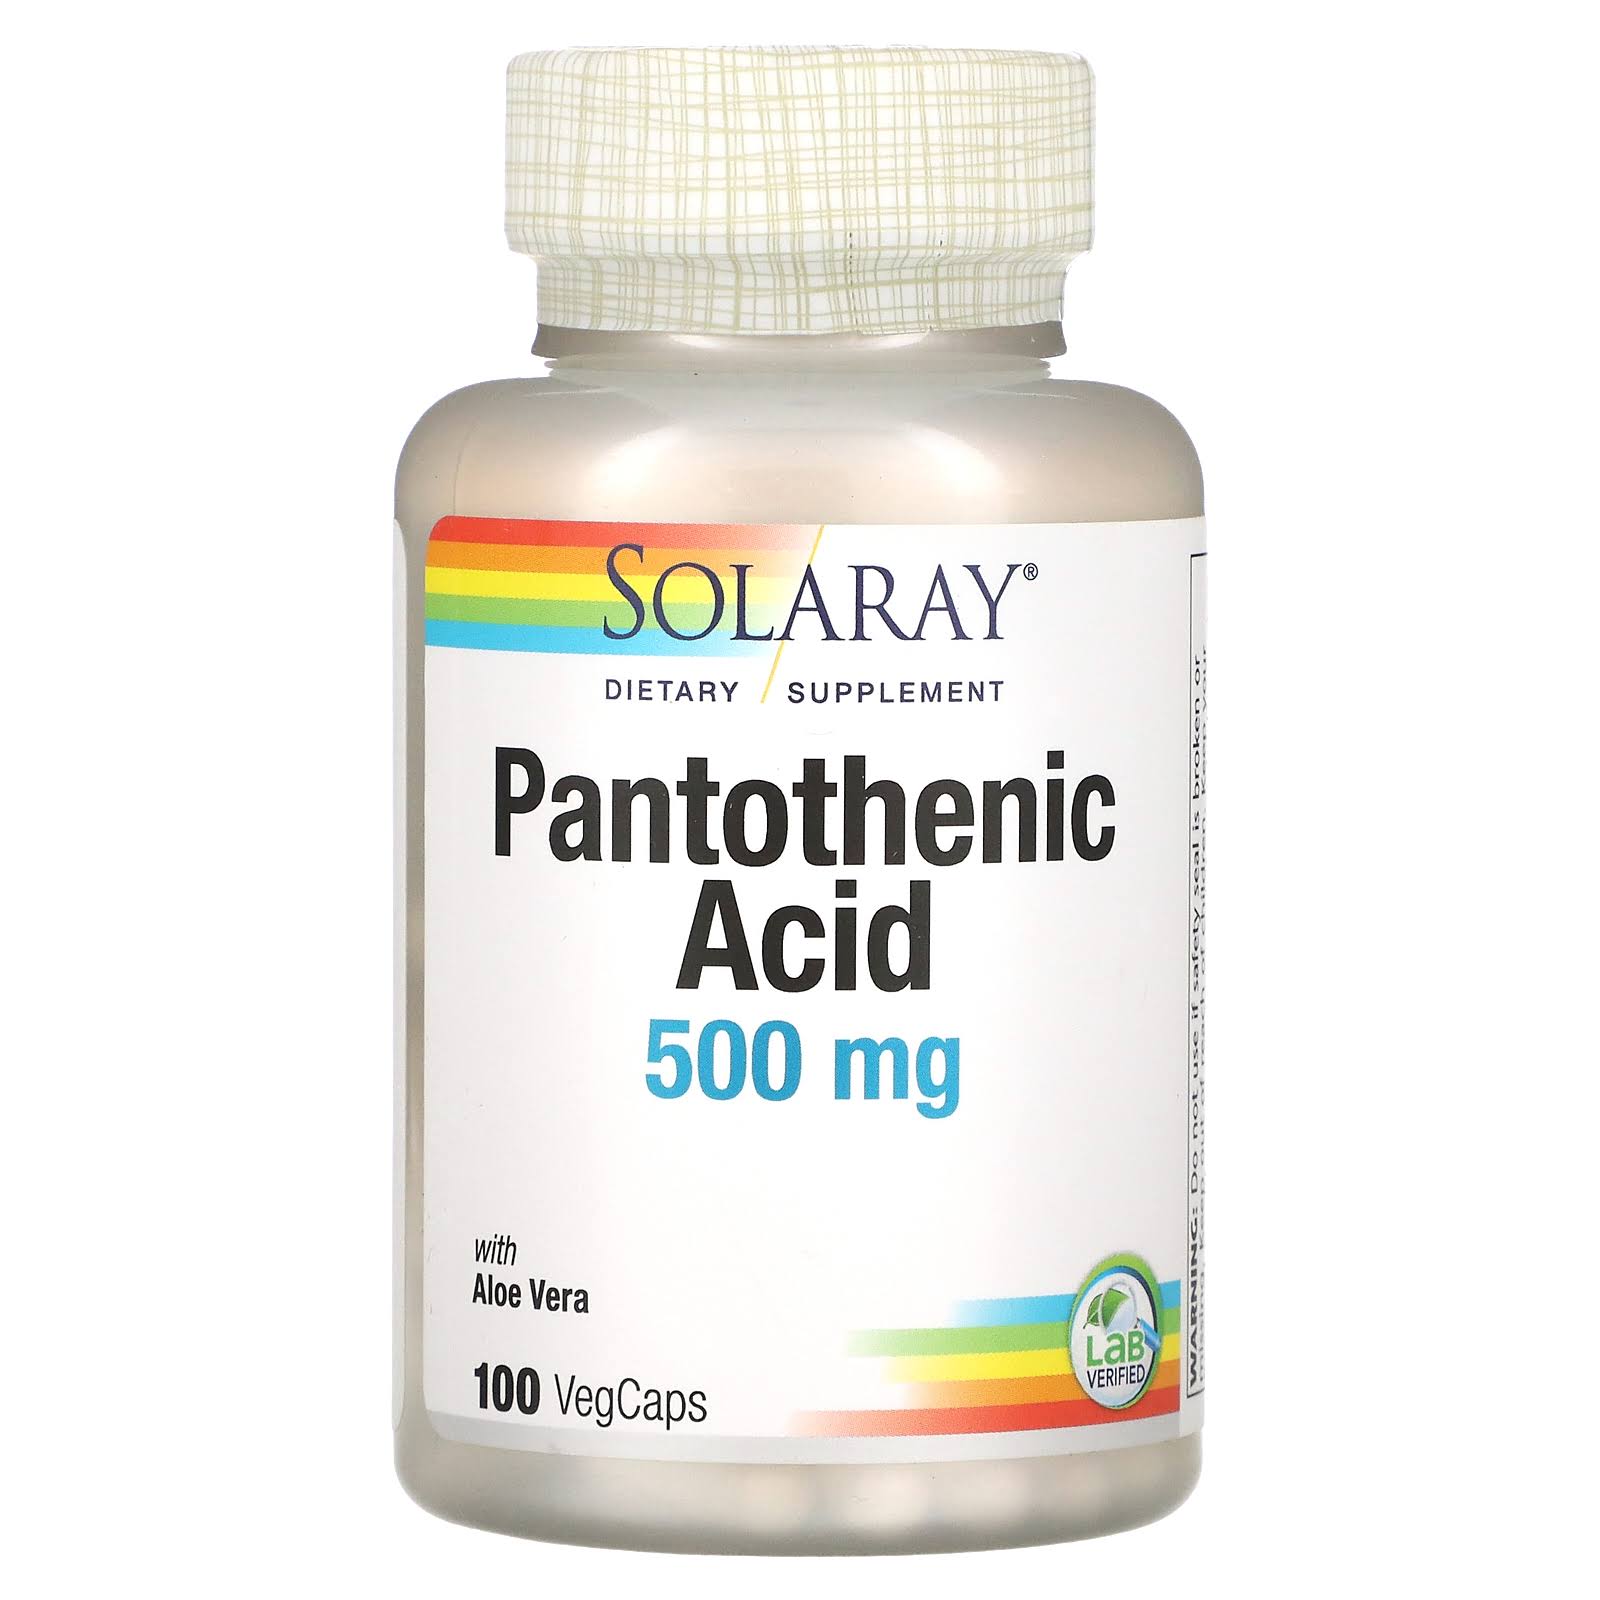 Solaray Pantothenic Acid 500 mg capsules - 100 count